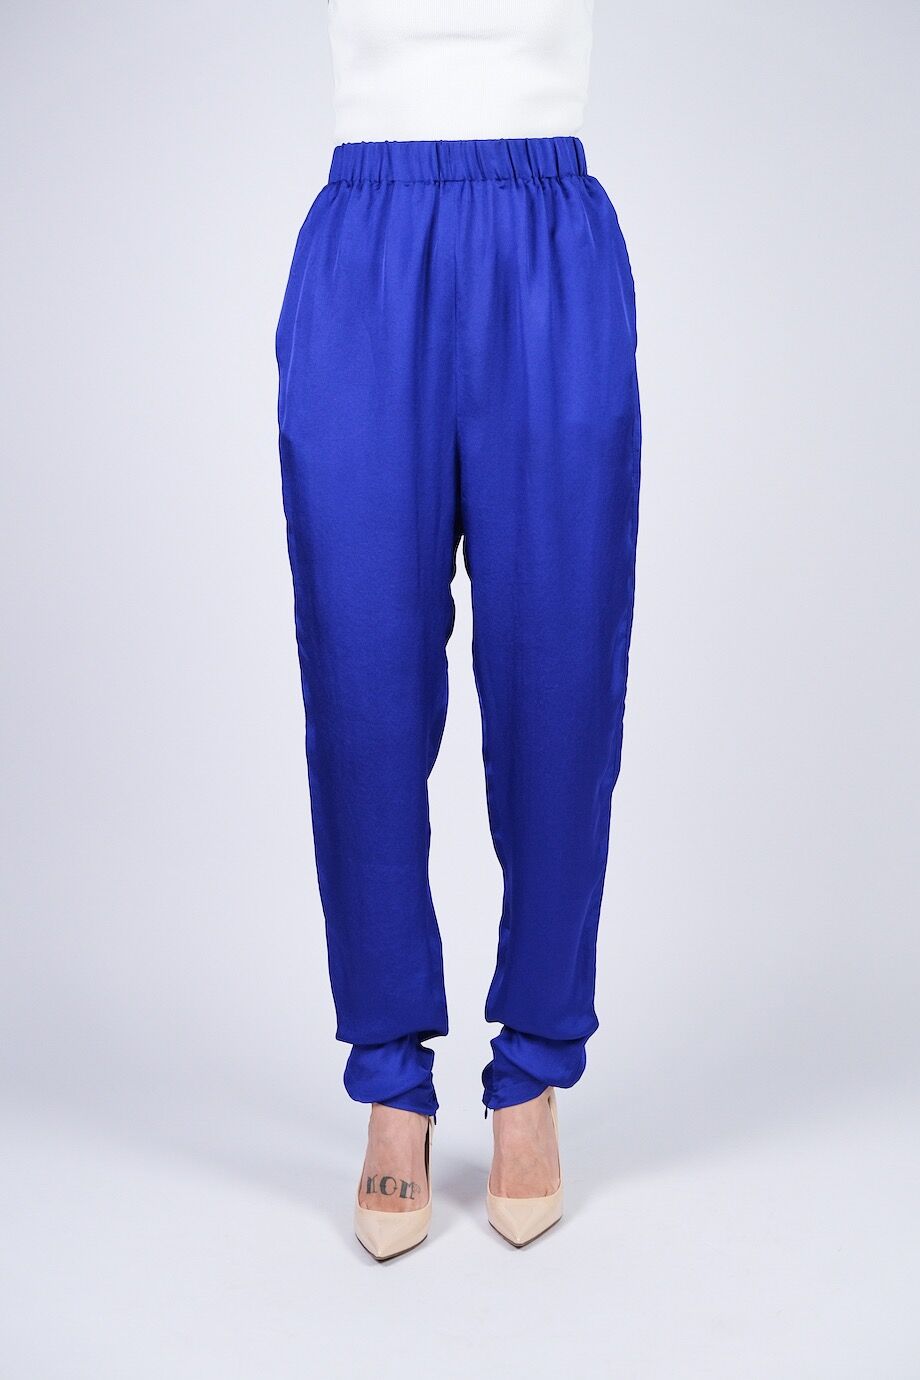 image 2 Атласные брюки синего цвета на резинке